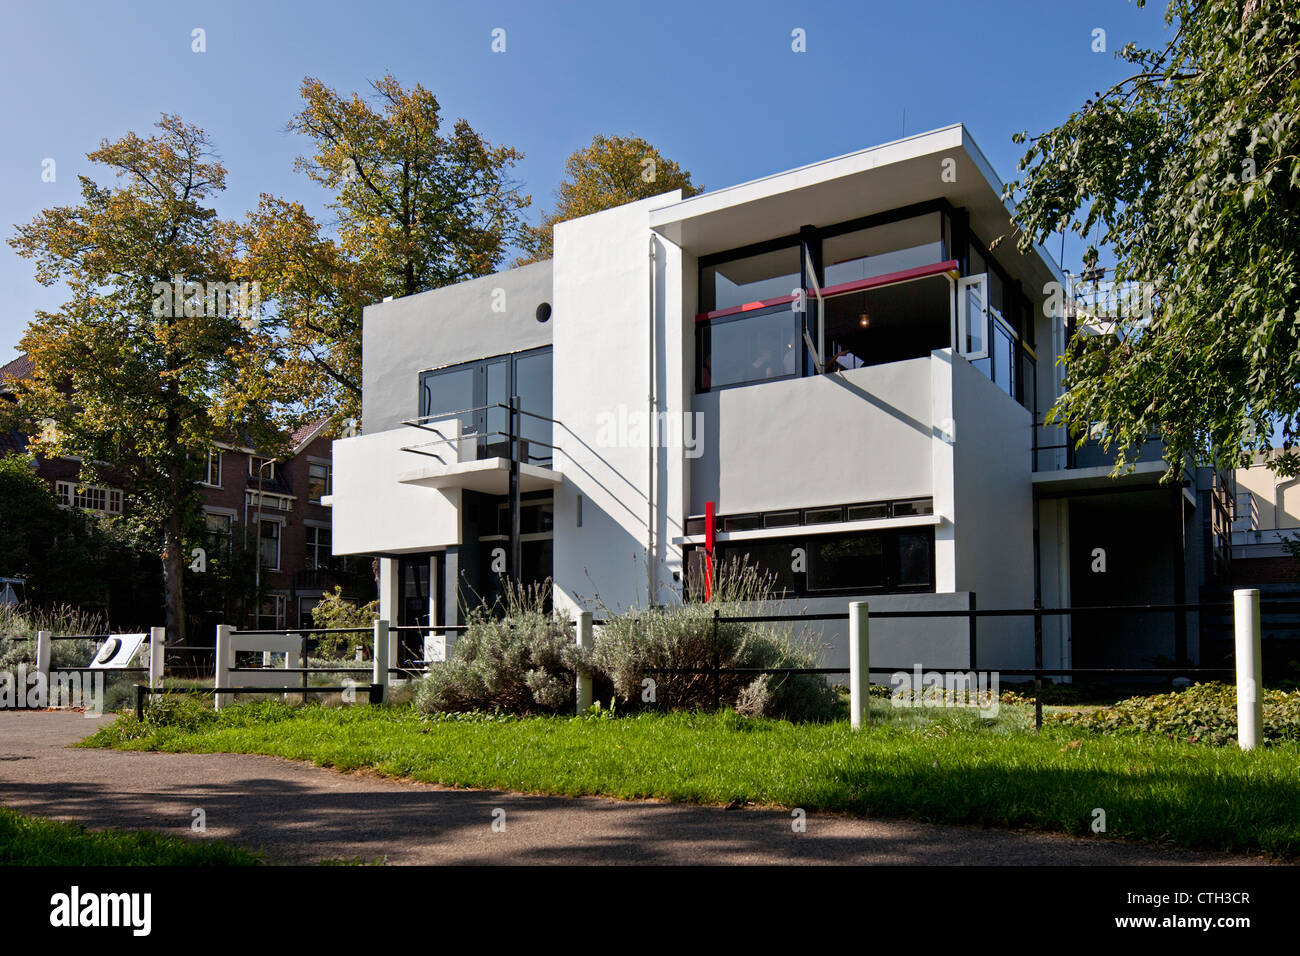 Los Países Bajos, Utrecht, Rietveld Schrosder house. Sitio de Patrimonio Mundial de la UNESCO. Foto de stock